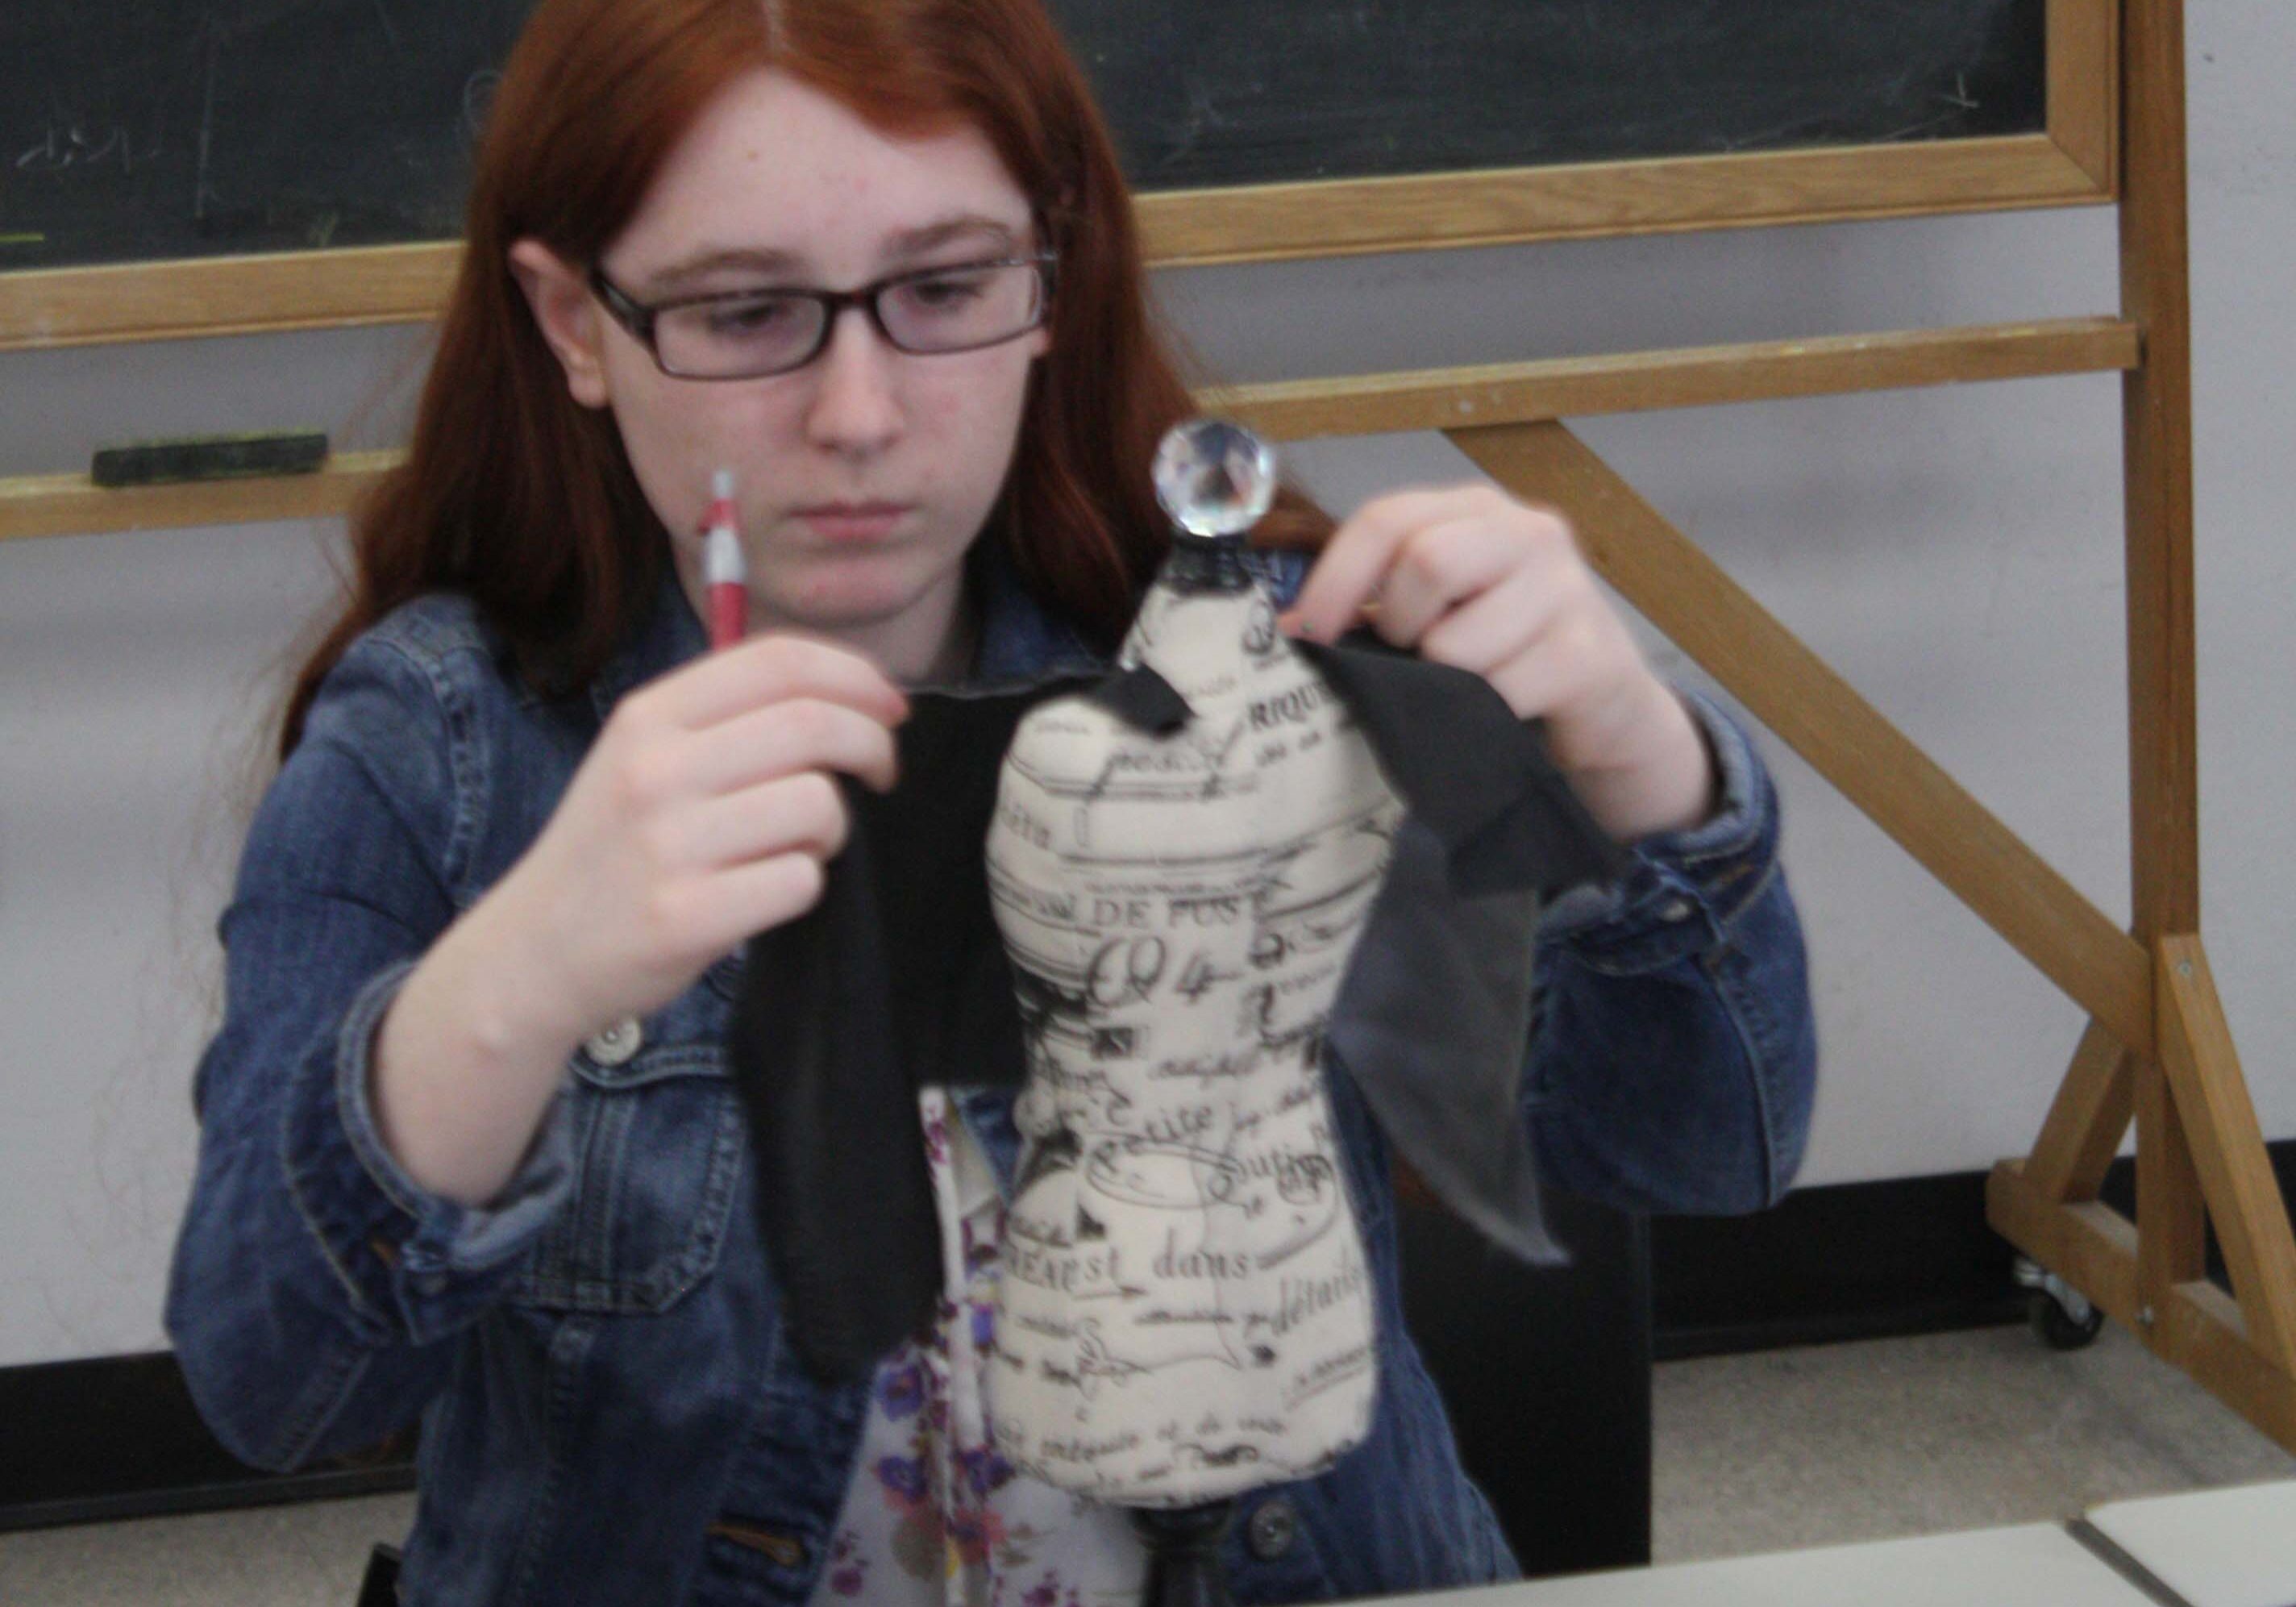 A participant in a teen program designs a dress on a miniature dress form